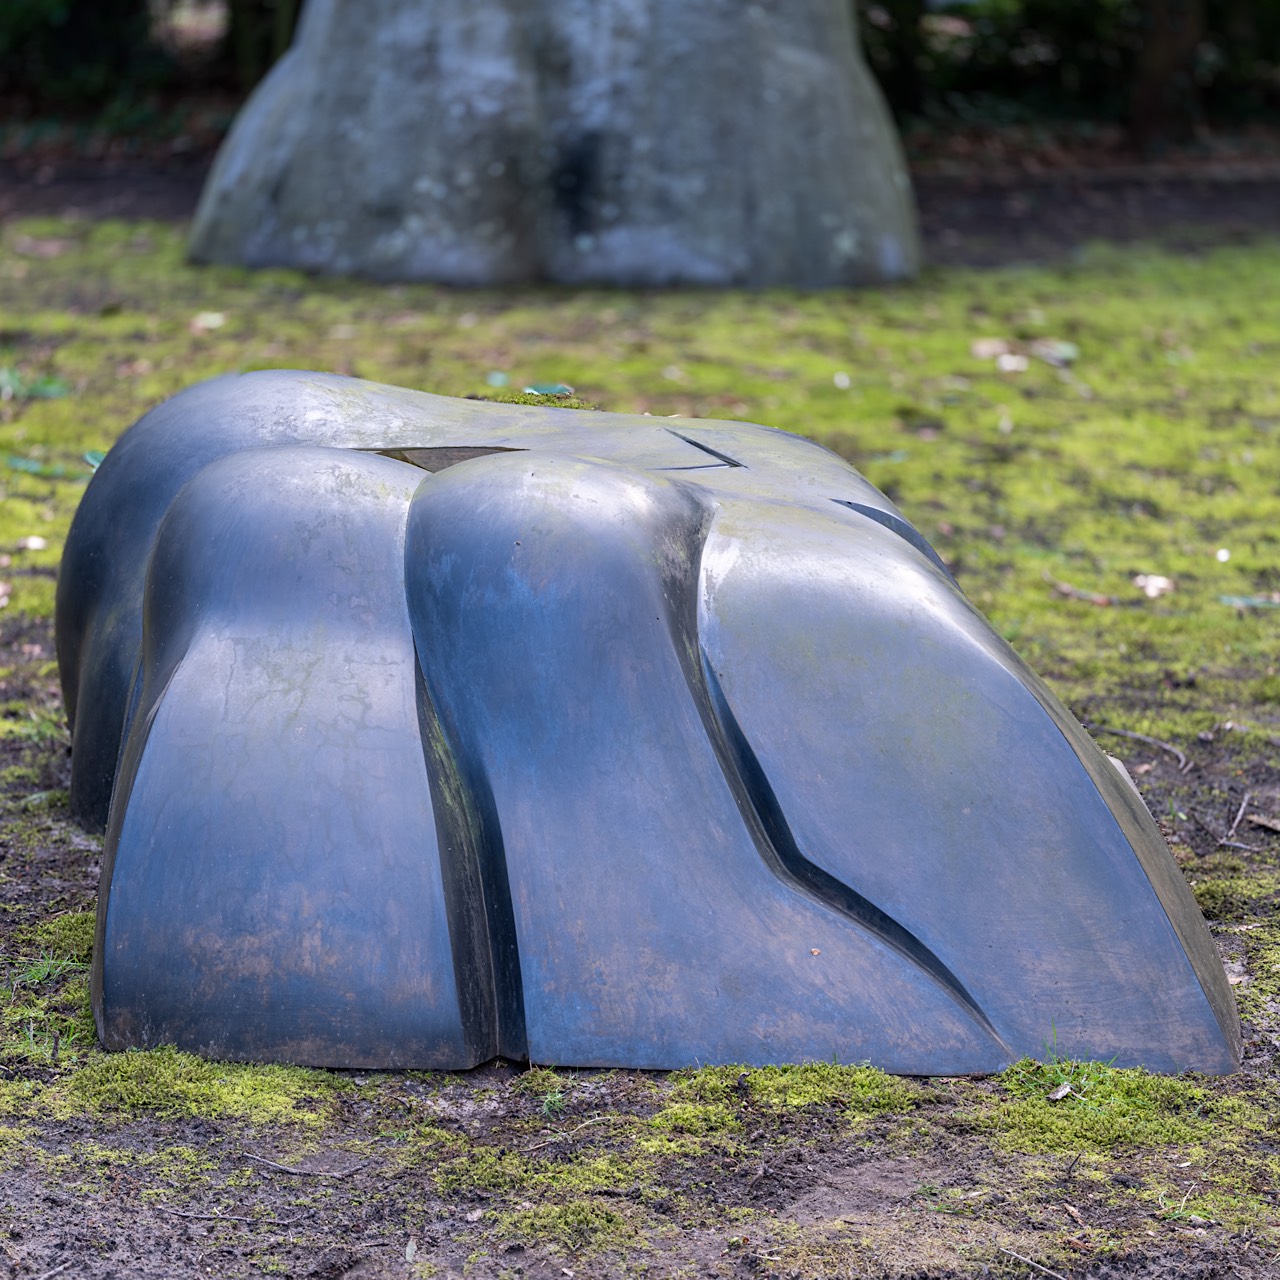 Pol Spilliaert (1935-2023), 'De schone slaapster', bronze patinated polyester, 1986-1989 - Image 13 of 16